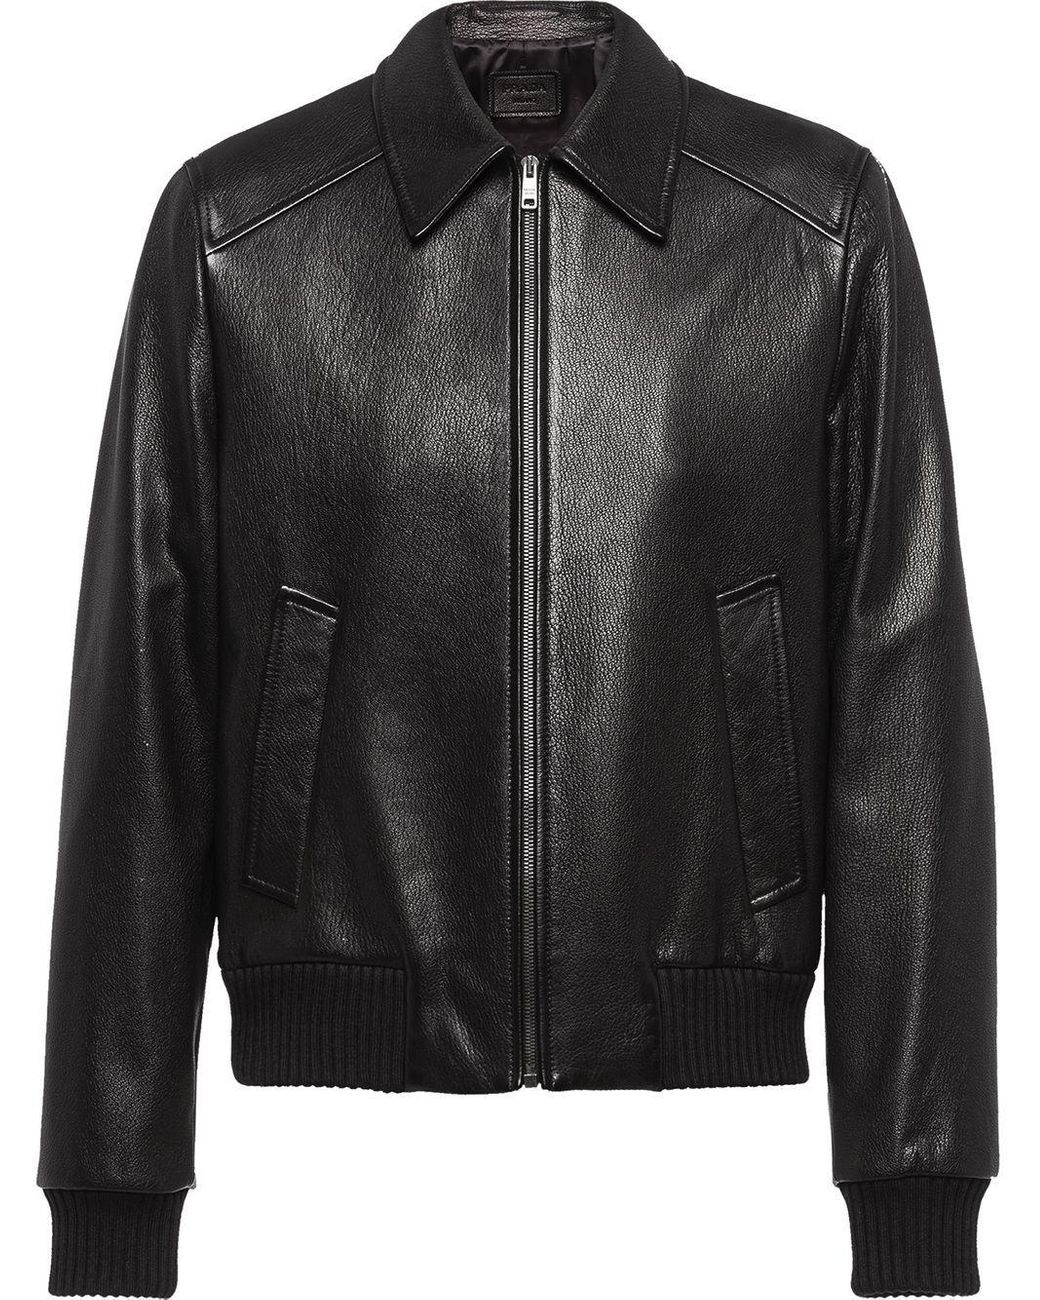 Prada Elasticated Leather Jacket in Black for Men - Save 33% - Lyst